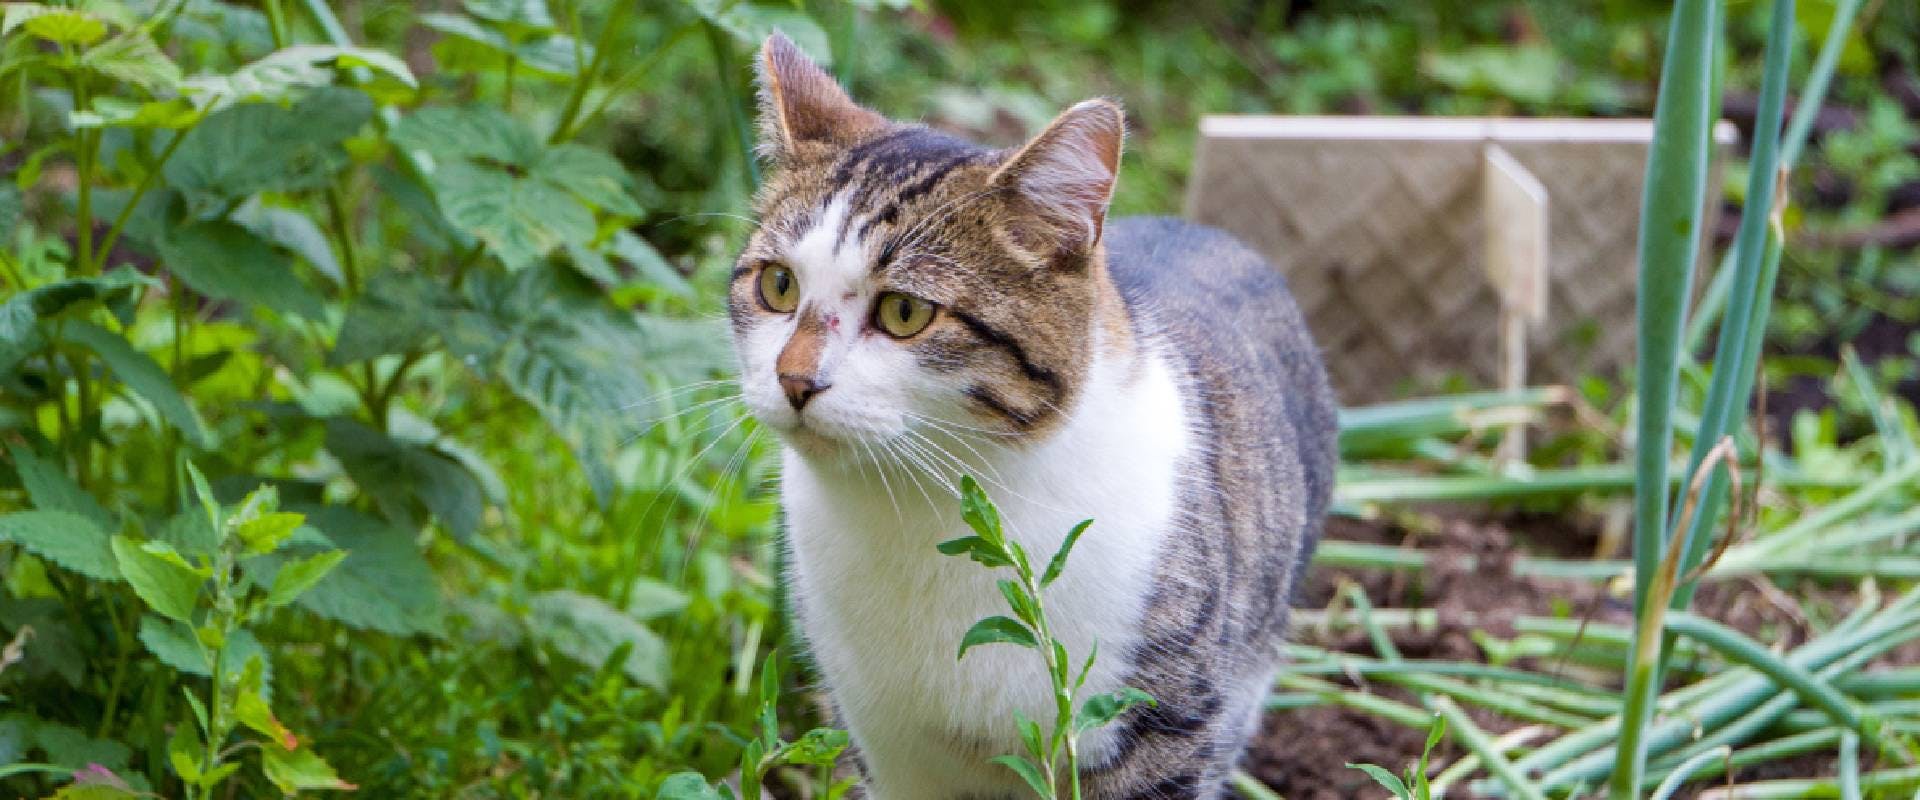 Cat walking around a garden growing green onions